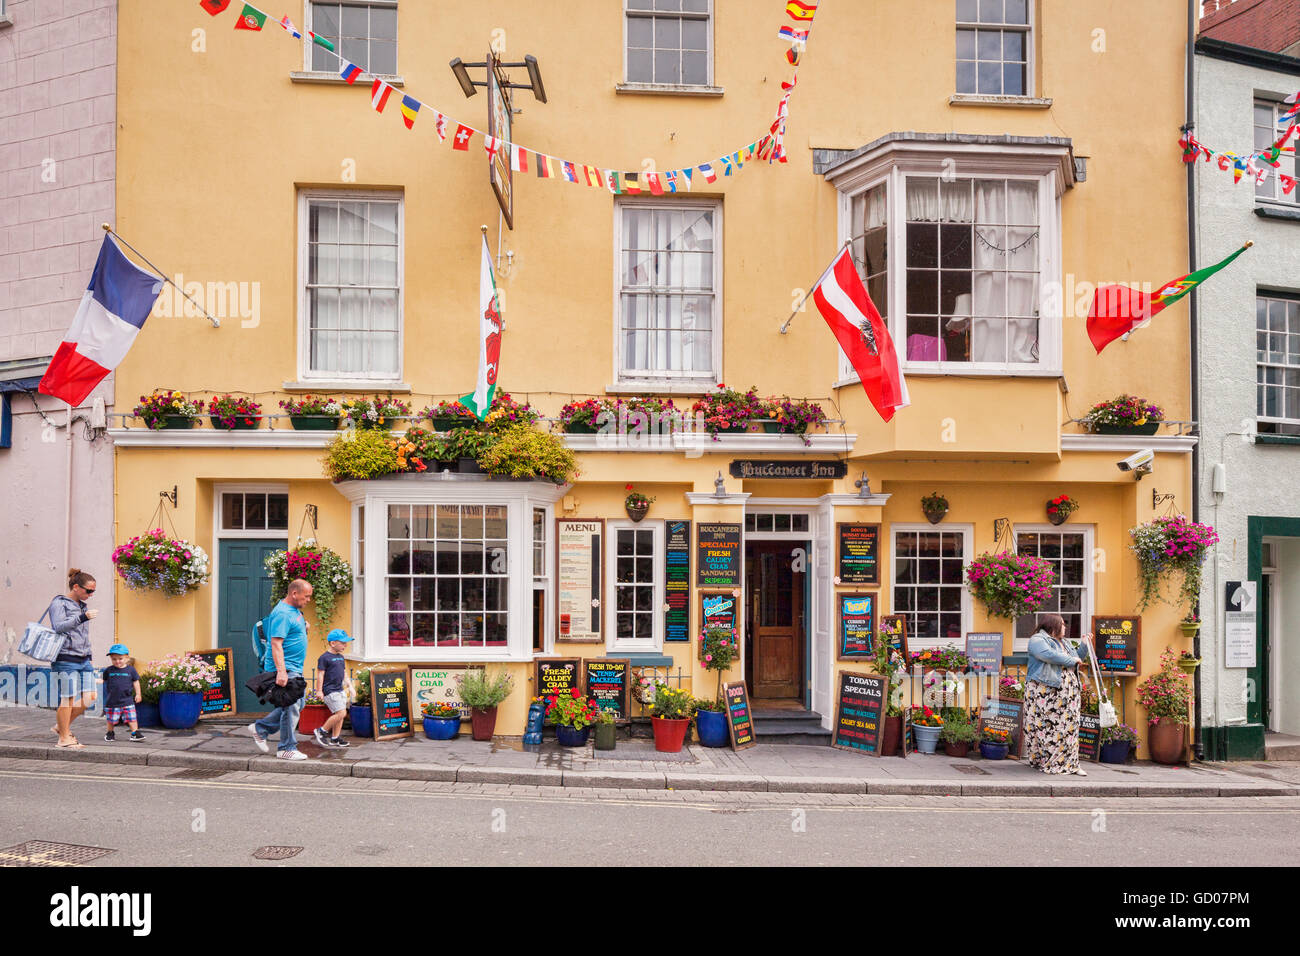 Buccaneer Inn, Tenby, Pembrokeshire, Wales, UK Stock Photo